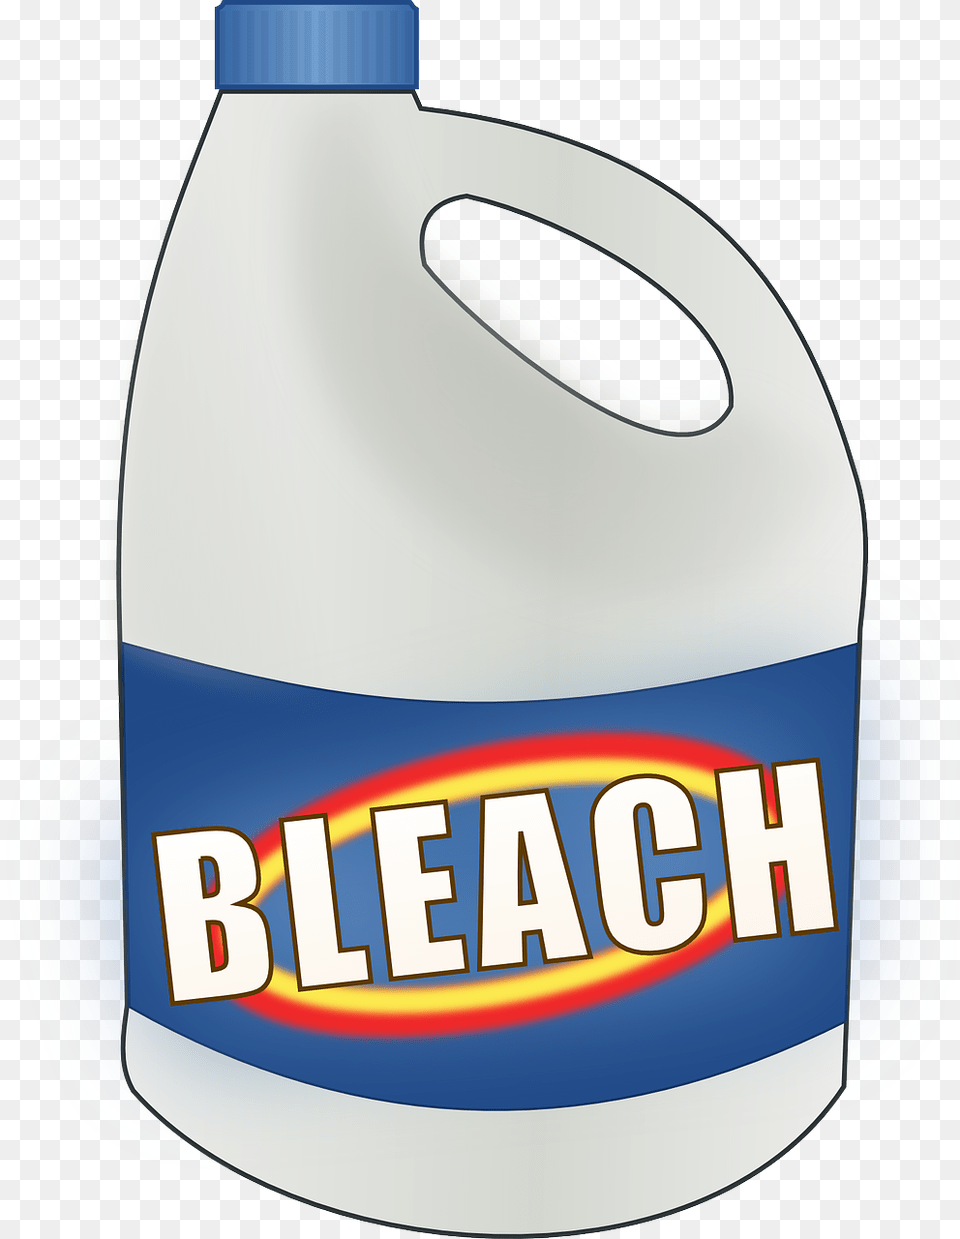 Bleach Clipart, Jug, Bottle, Water Jug Free Png